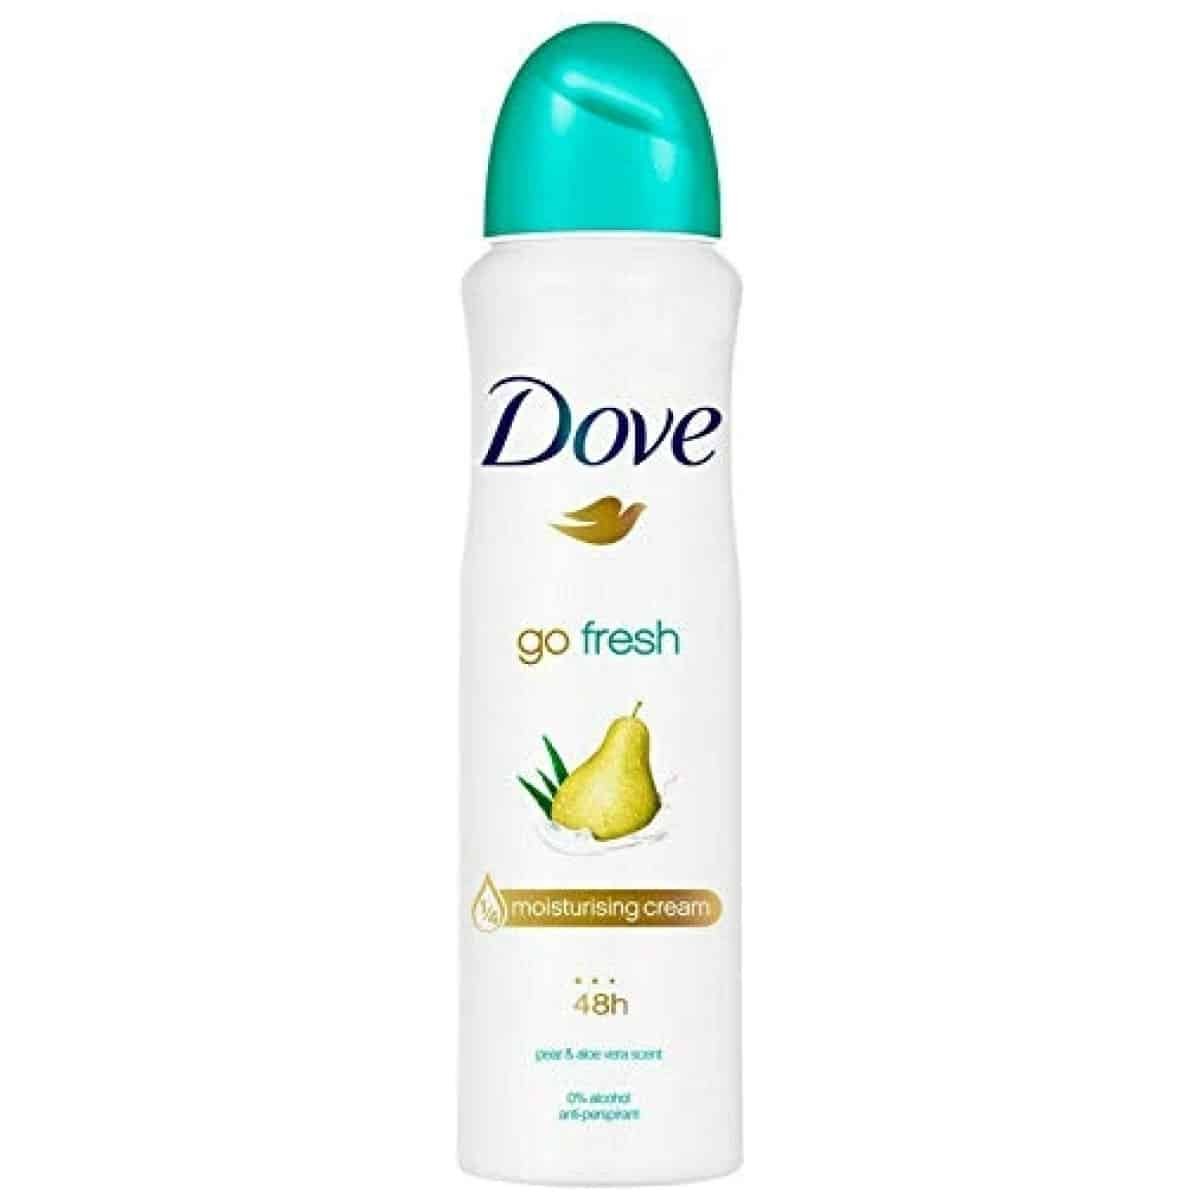 Dove Go Fresh Pear And Aloe Vera Deodorant Spray 250ml